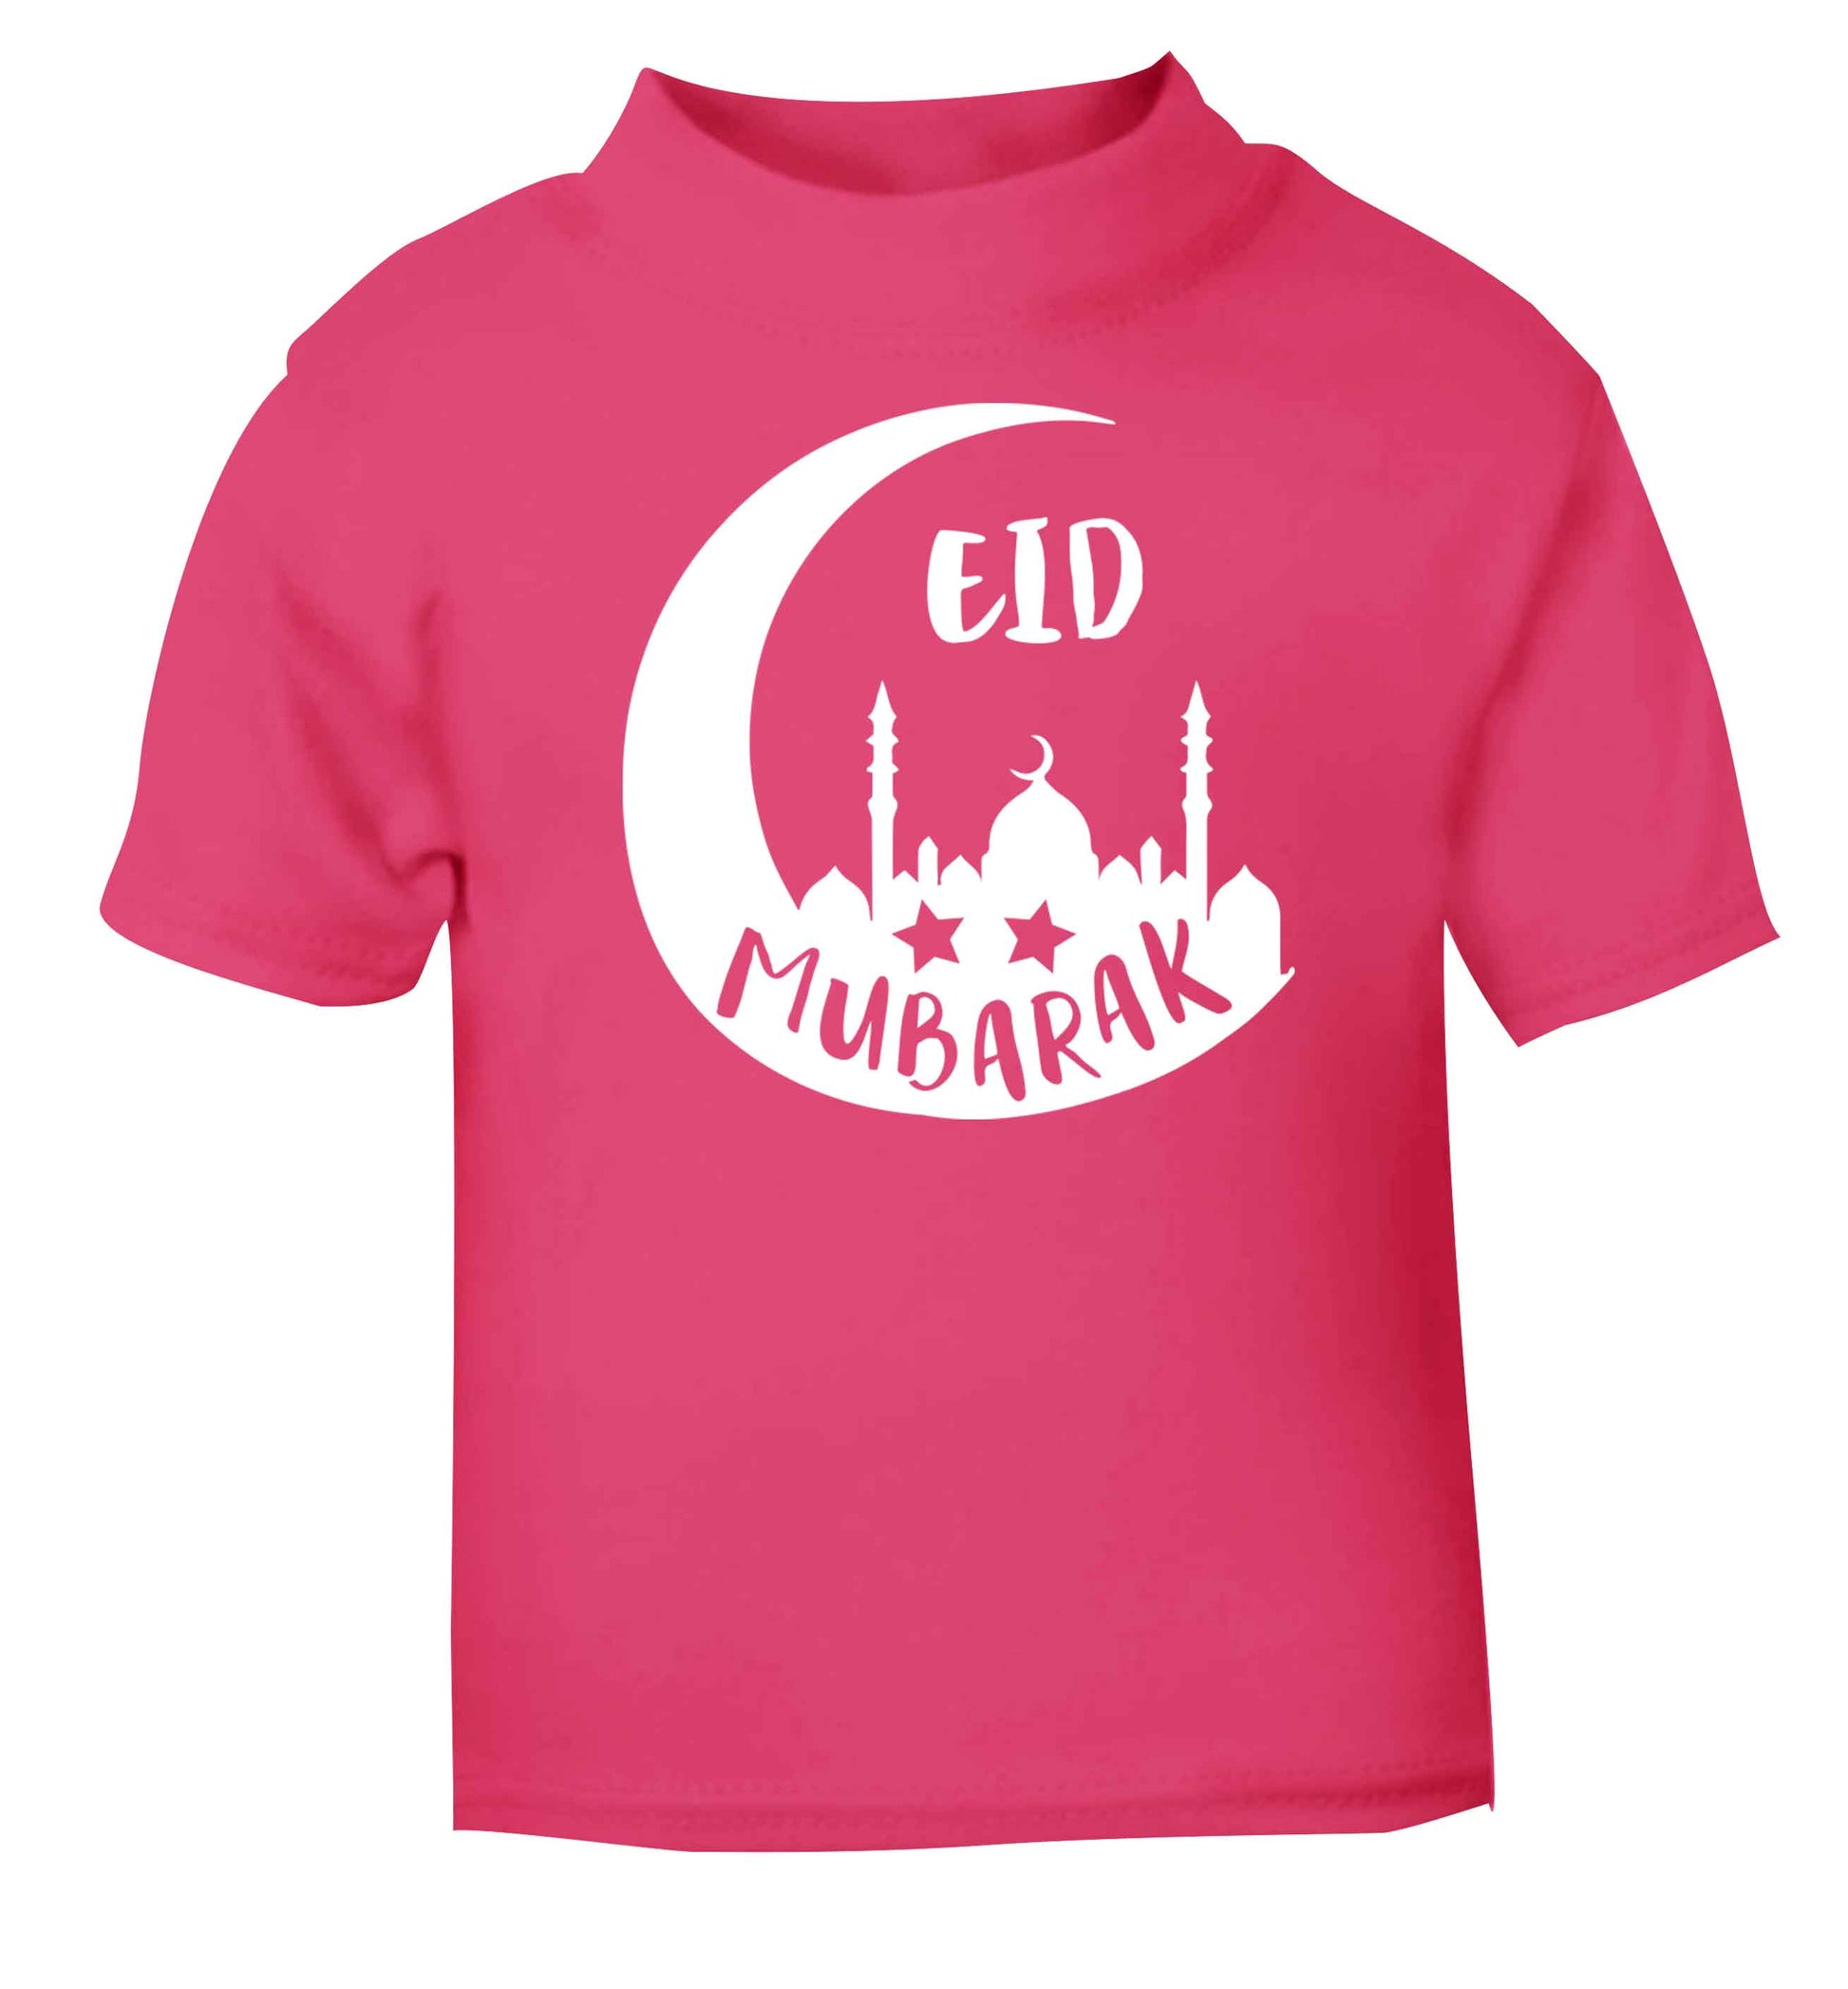 Eid mubarak pink baby toddler Tshirt 2 Years